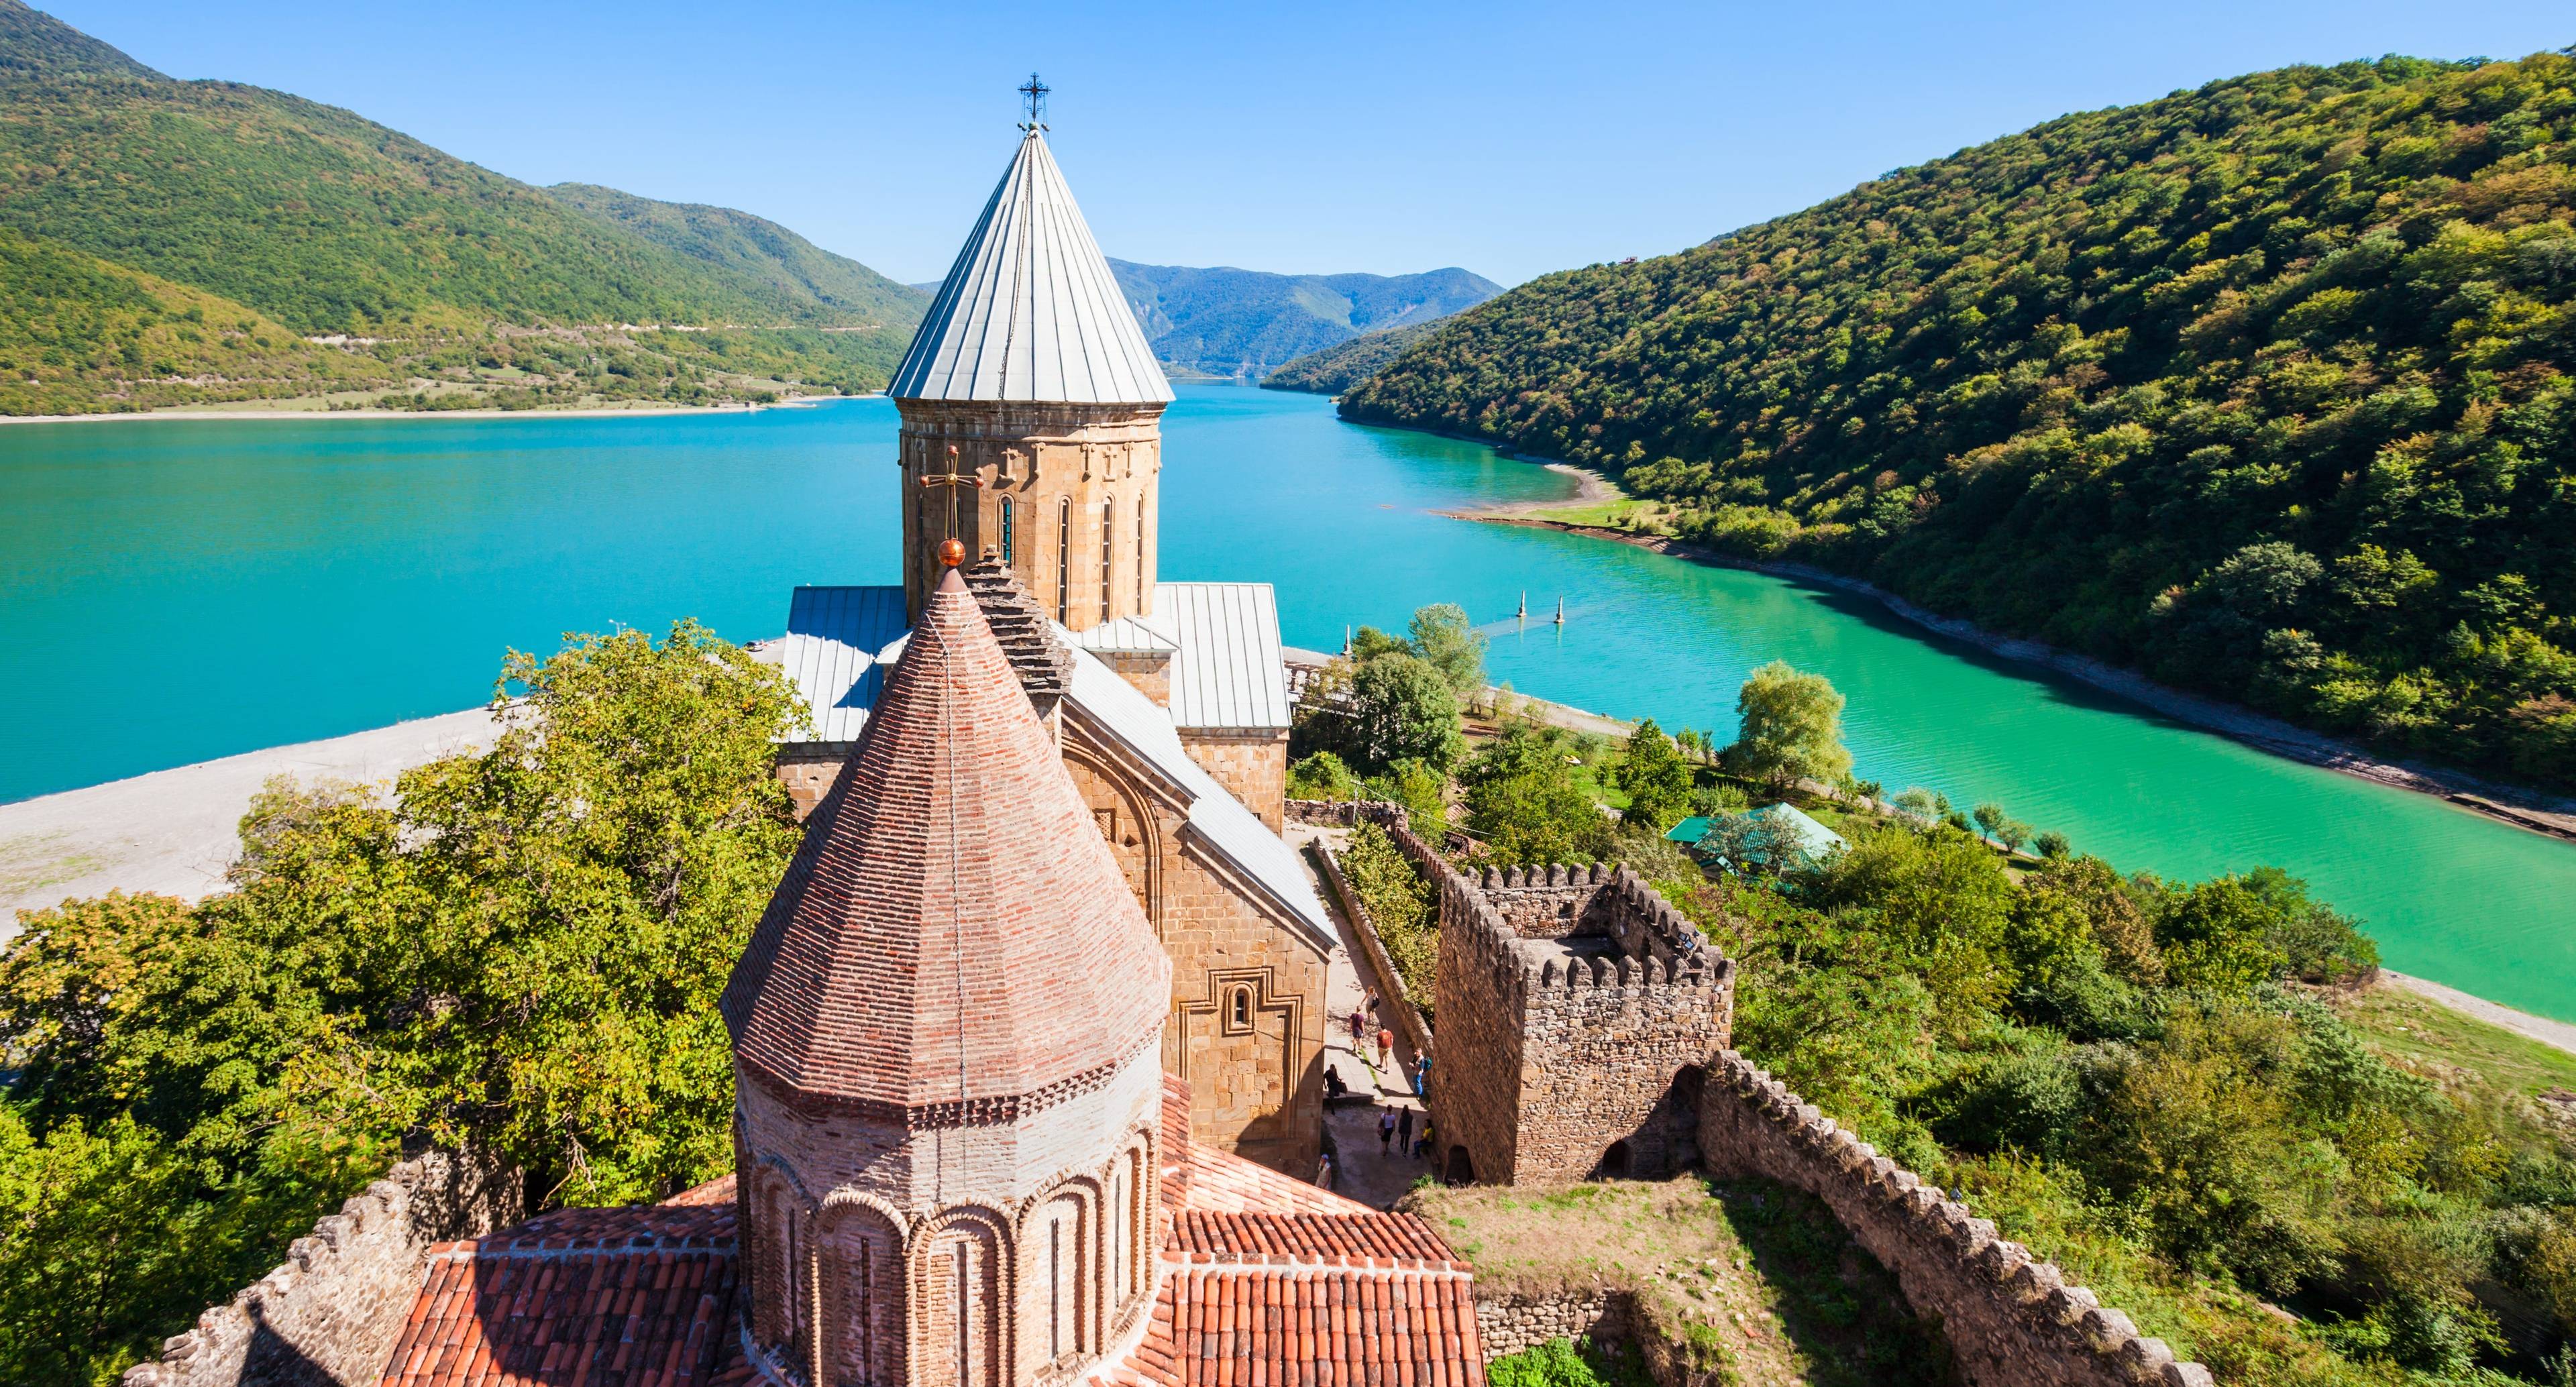 Leave the City to Explore Rural Georgian Monasteries